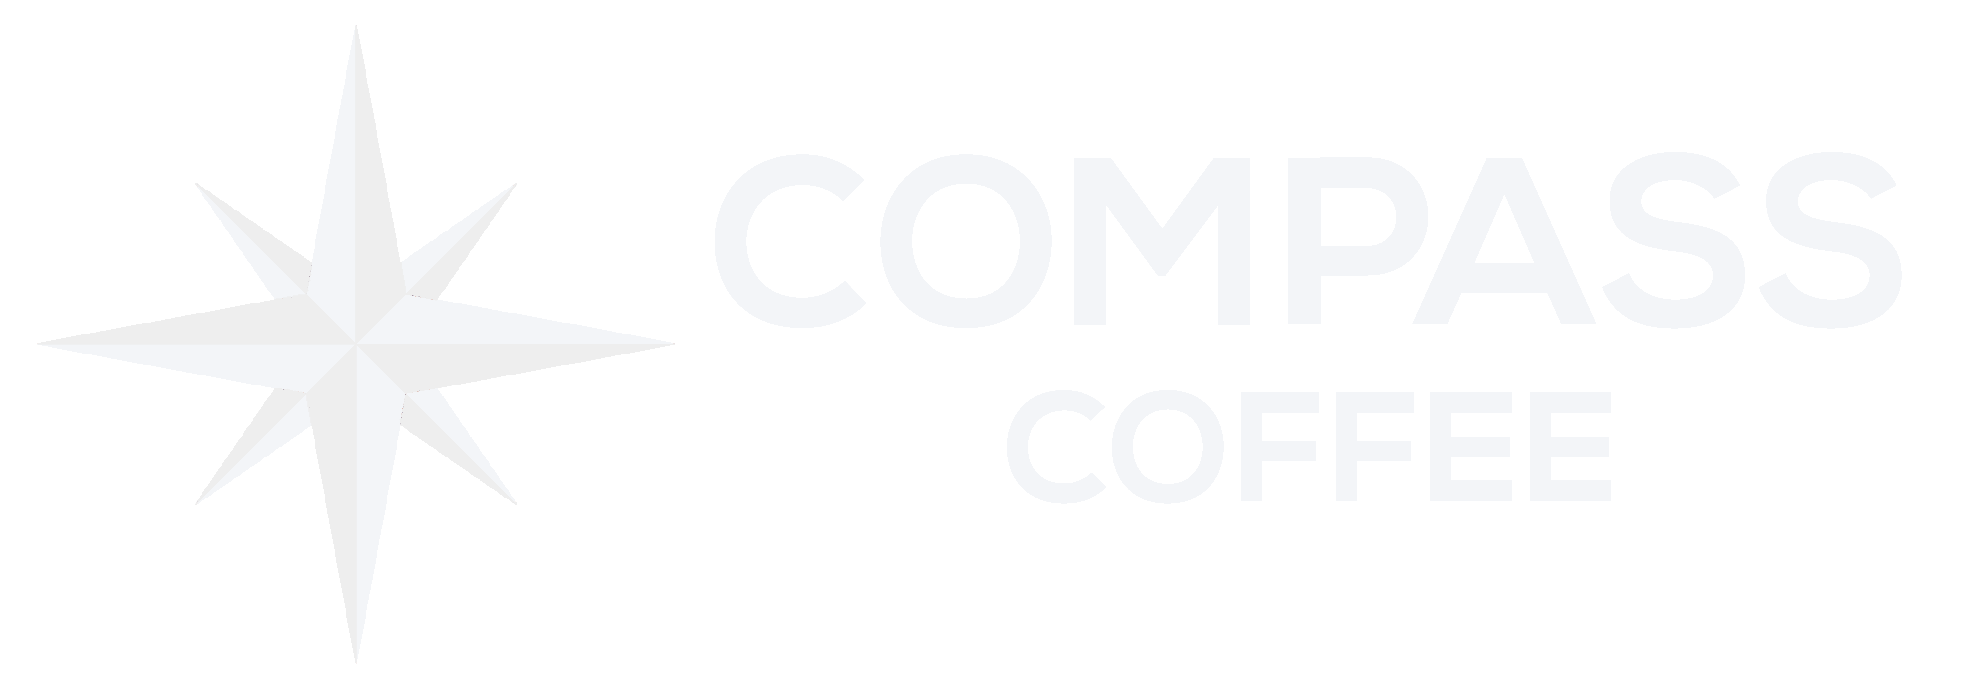 Compass_Coffee_White logo